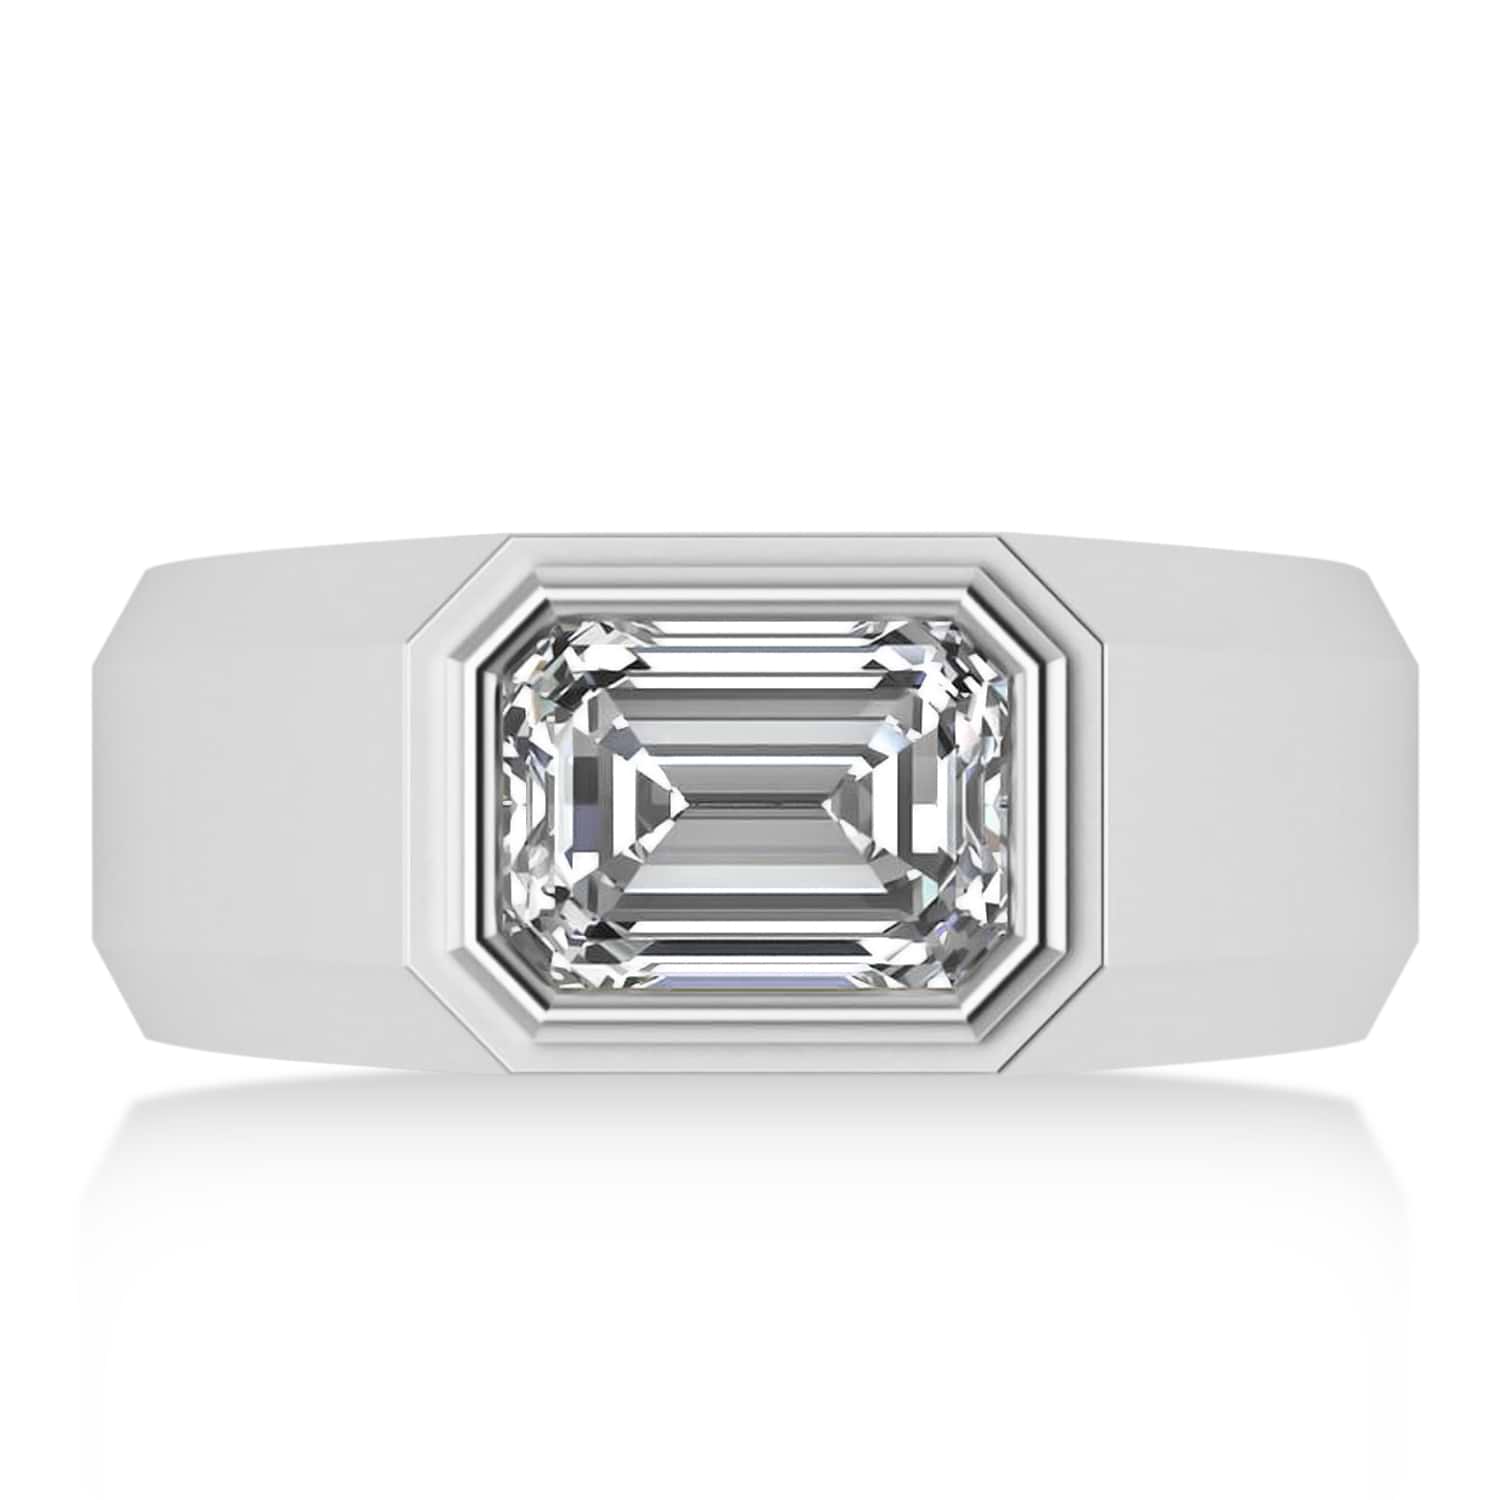 Diamond Solitaire Men's Engagement Ring 14k White Gold (2.50ct)